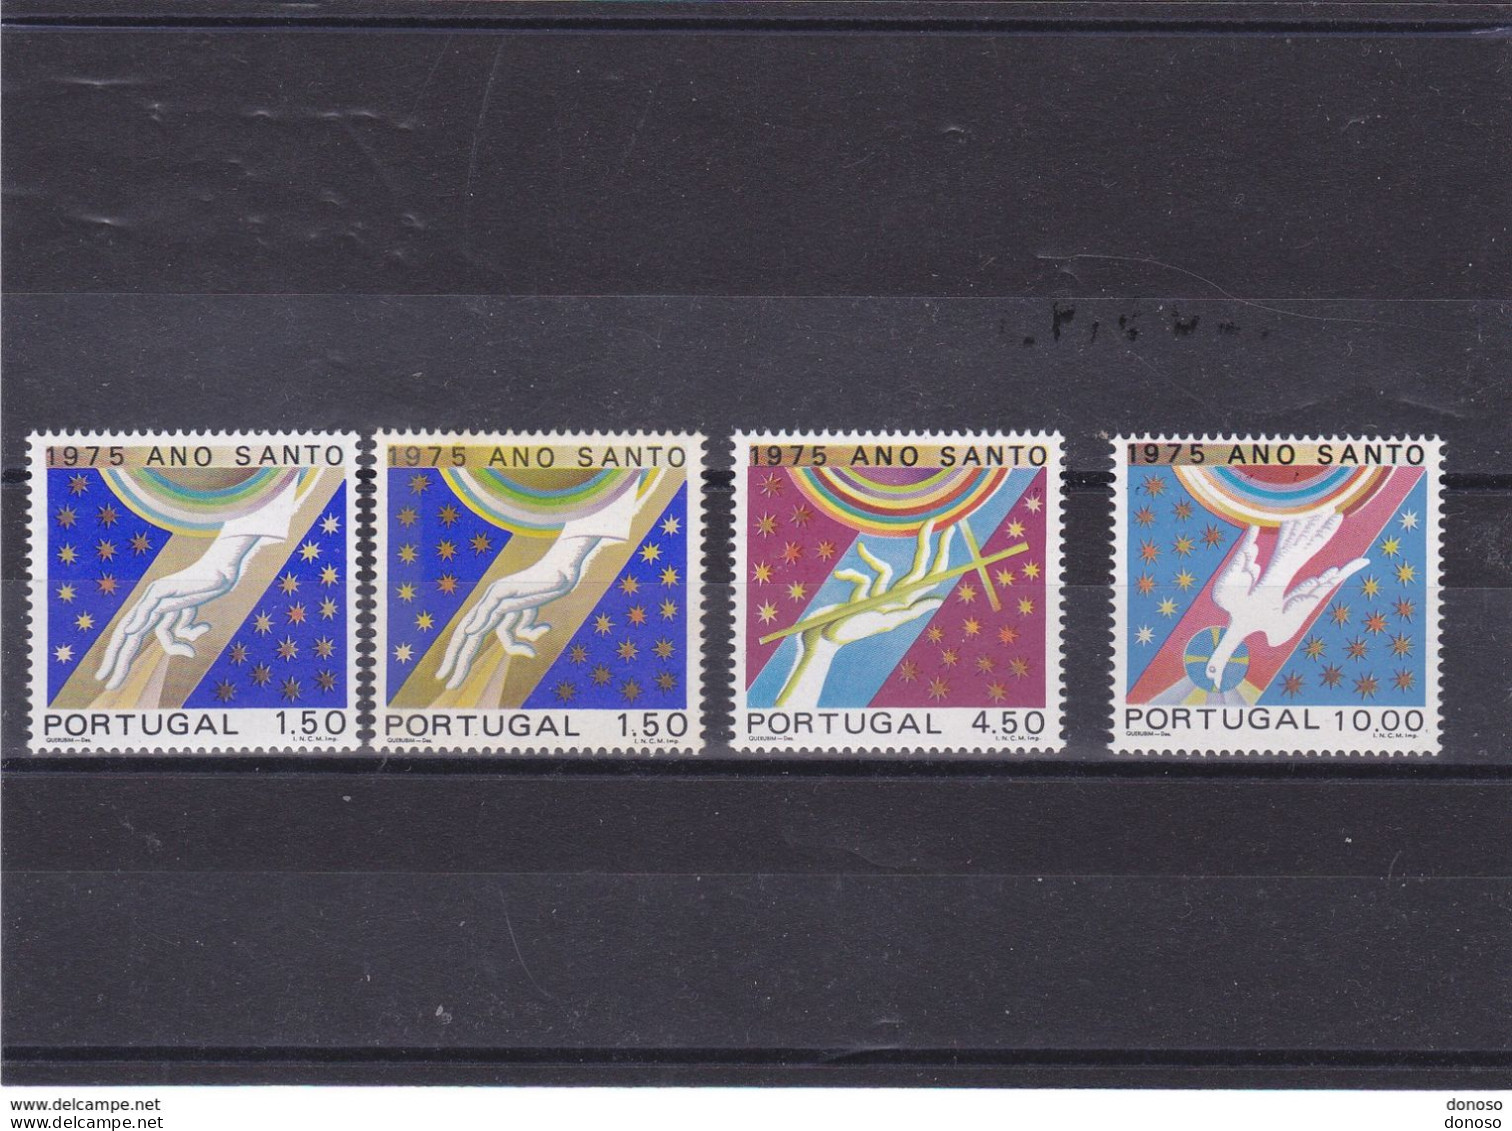 PORTUGAL 1975 ANNEE SAINTE Yvert 1258-1260 + 1258a, Michel 1278-1280 + 1278y NEUF** MNH Cote Yv 38,50 Euros - Unused Stamps